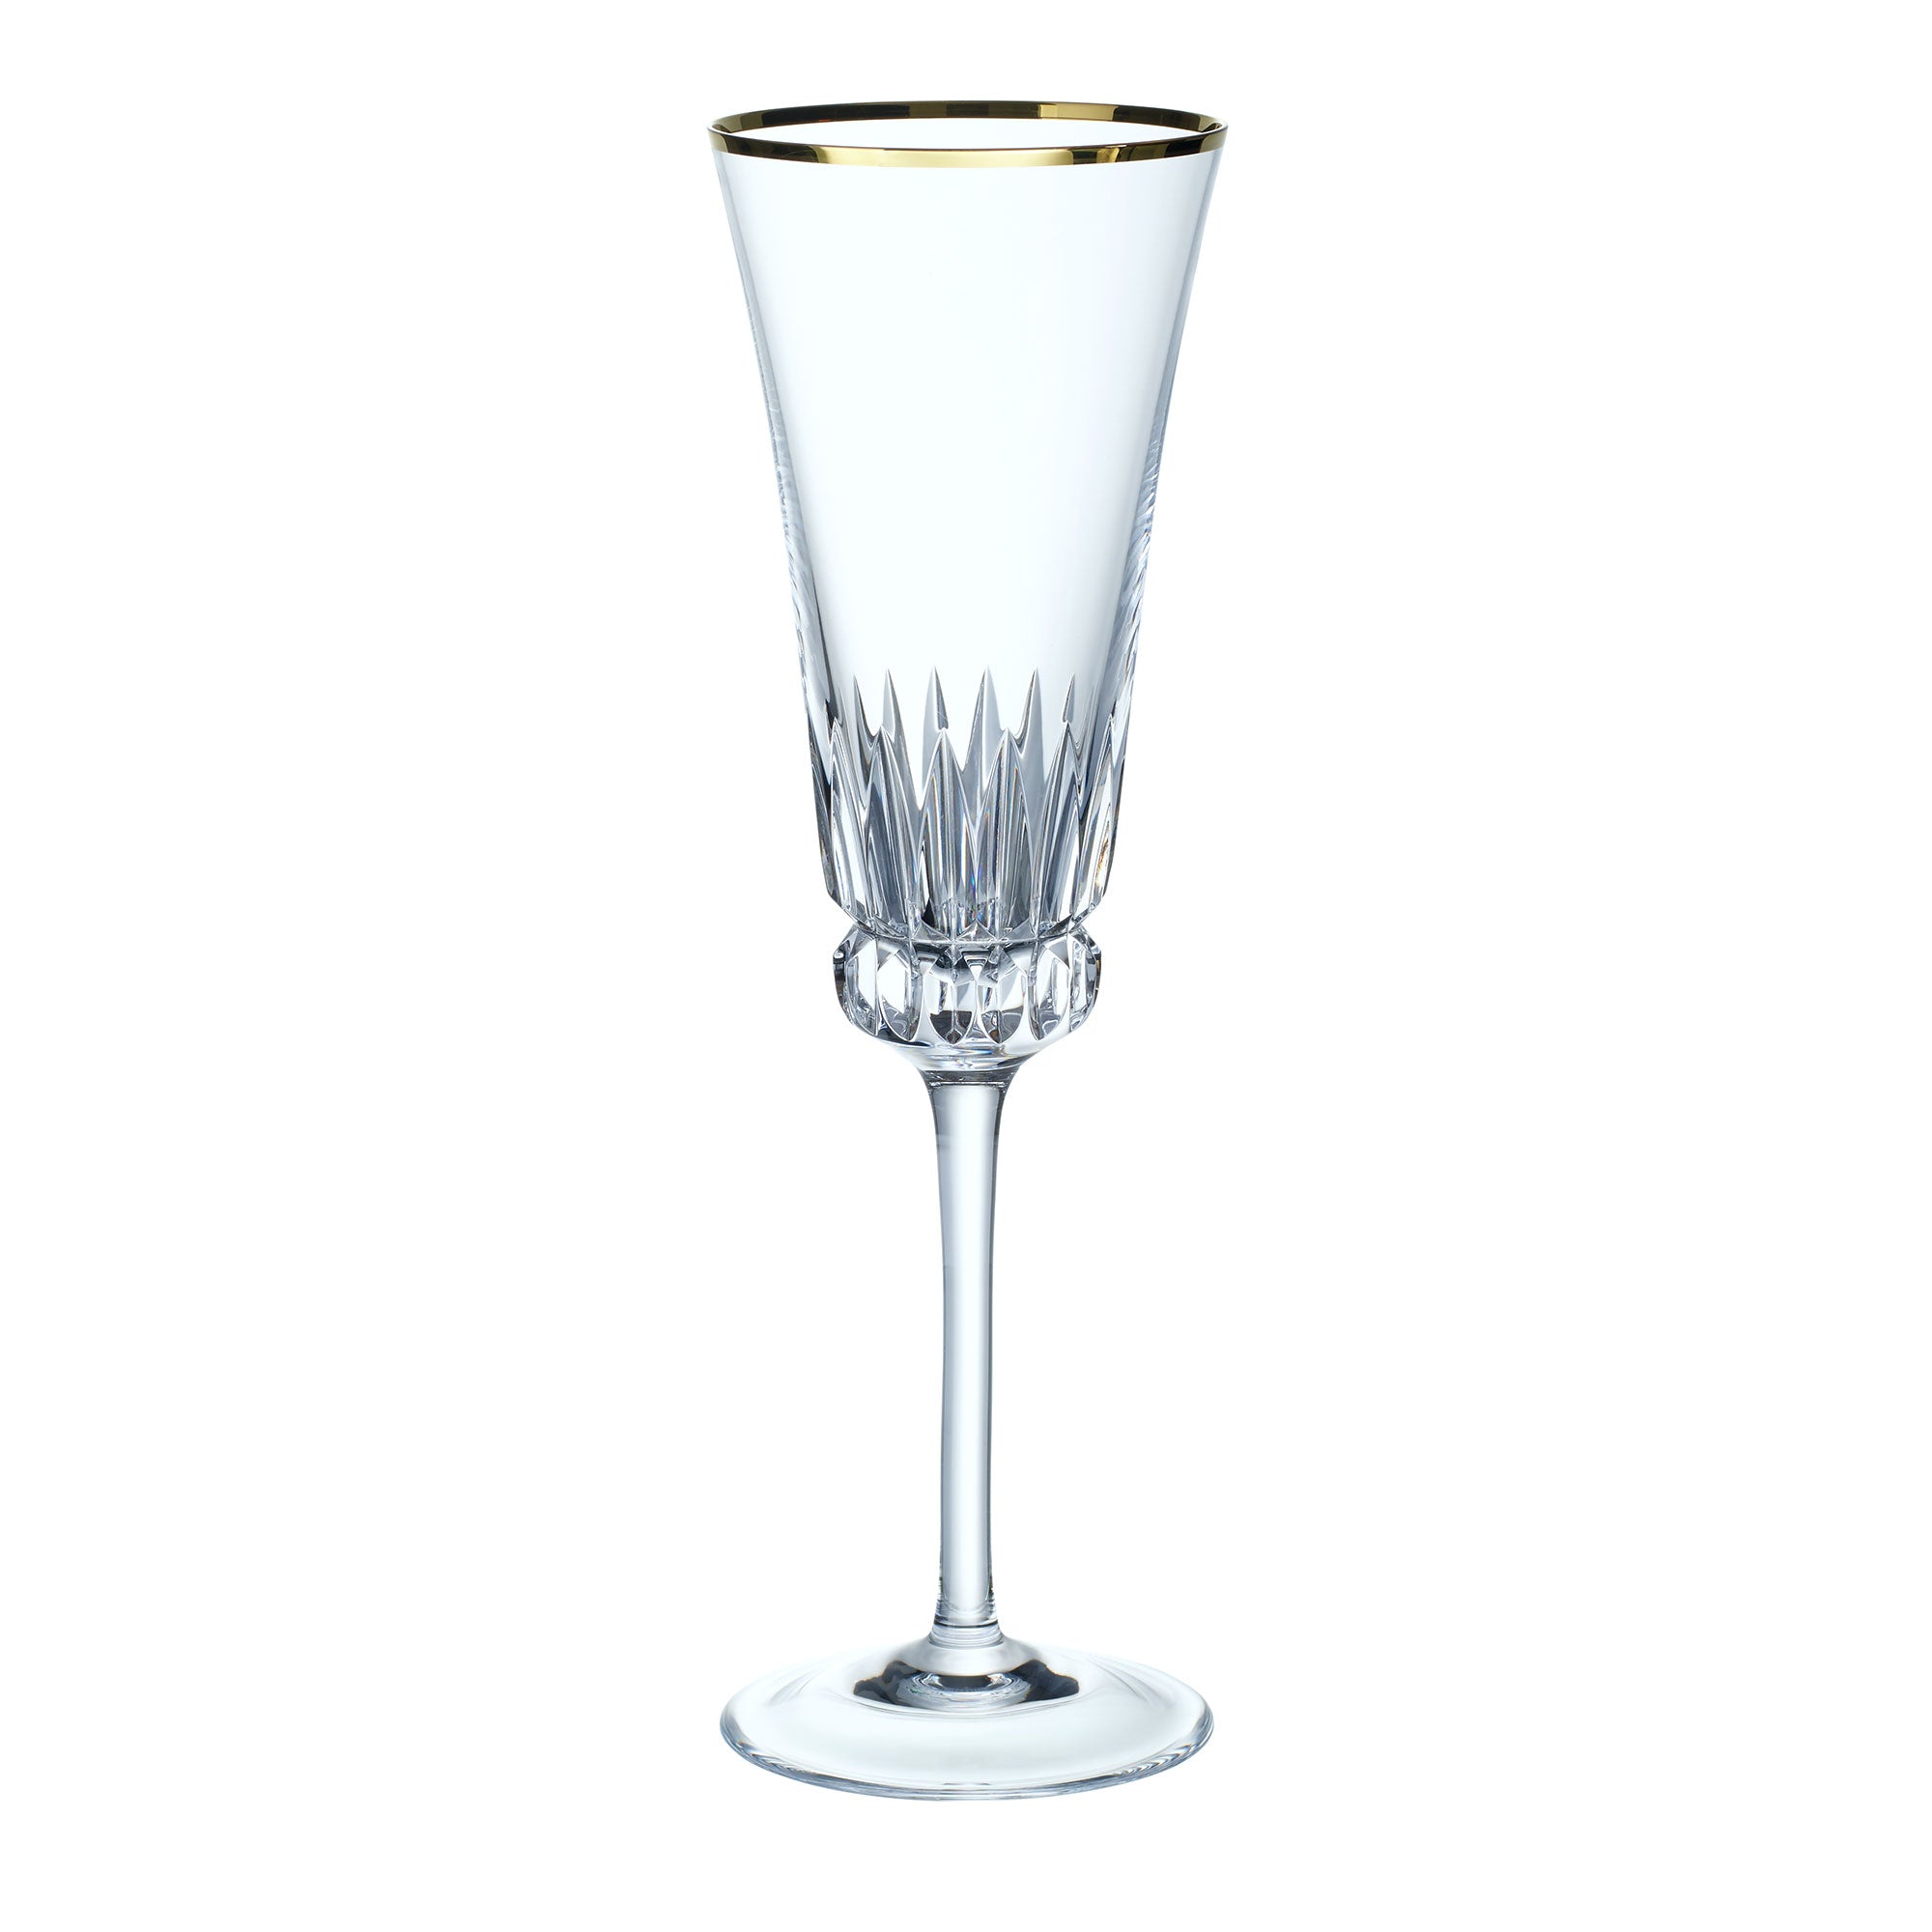 Villeroy & Boch Grand Royal Gold Champagne Flute, 7.5 oz